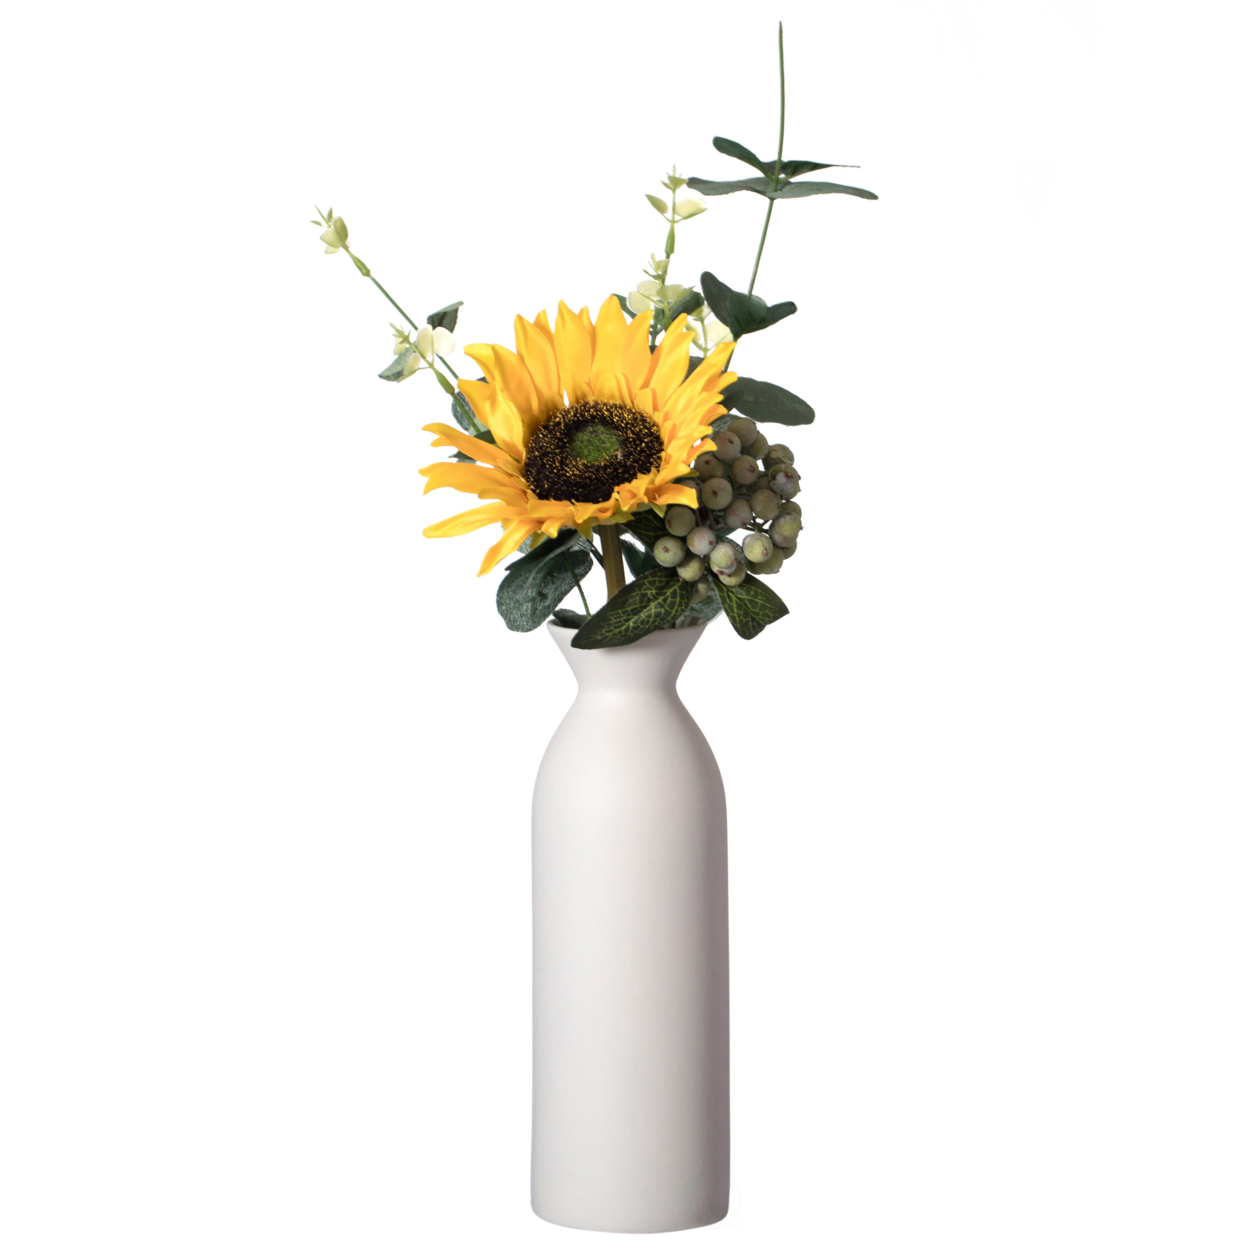 Contemporary White Cylinder Shaped Ceramic Table Flower Vase Holder - Medium